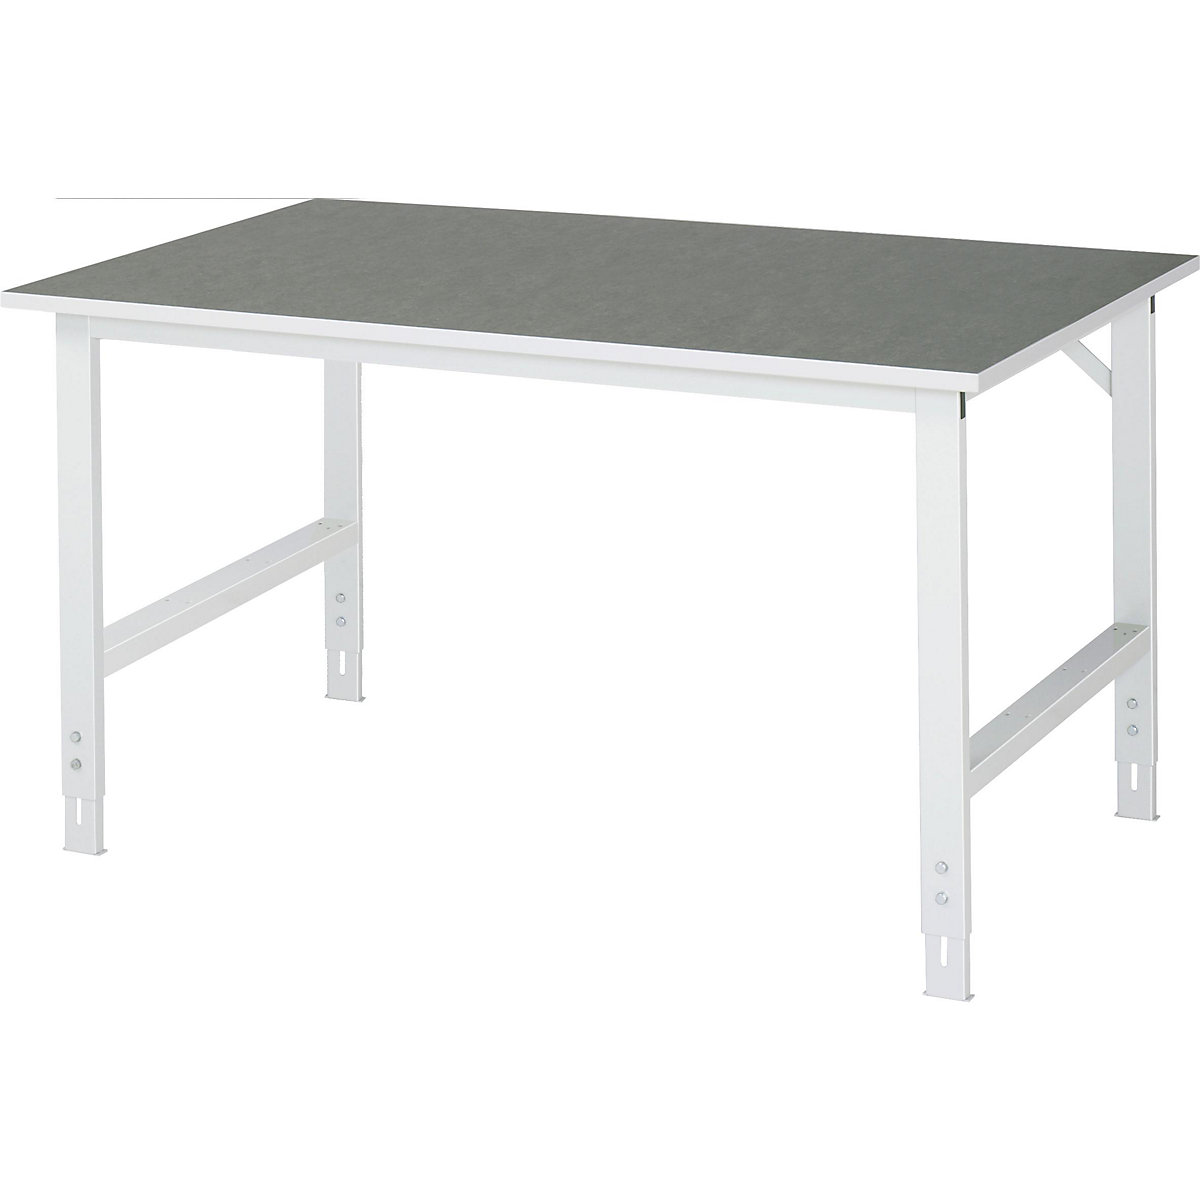 Werktafel, in hoogte verstelbaar – RAU, 760 – 1080 mm, linoleum blad, b x d = 1500 x 1000 mm, lichtgrijs-13